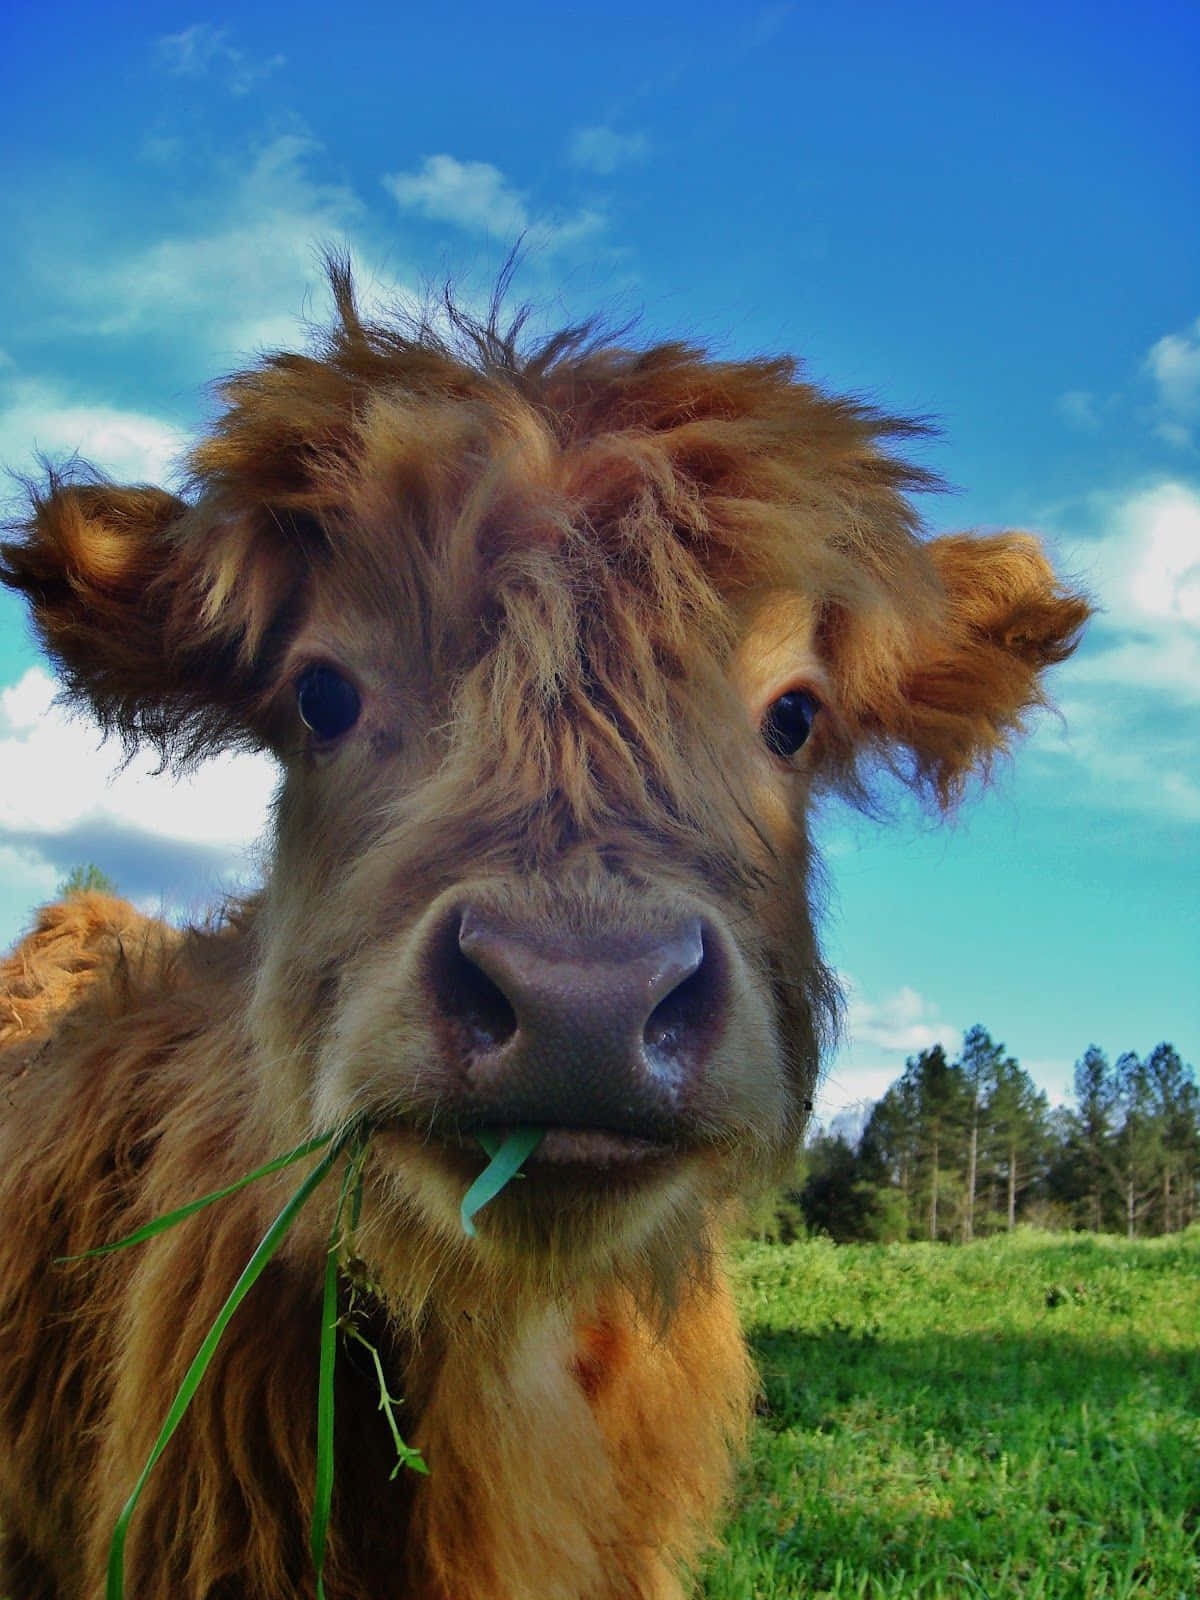 Cute Cow Iphone Lock Screen Wallpaper